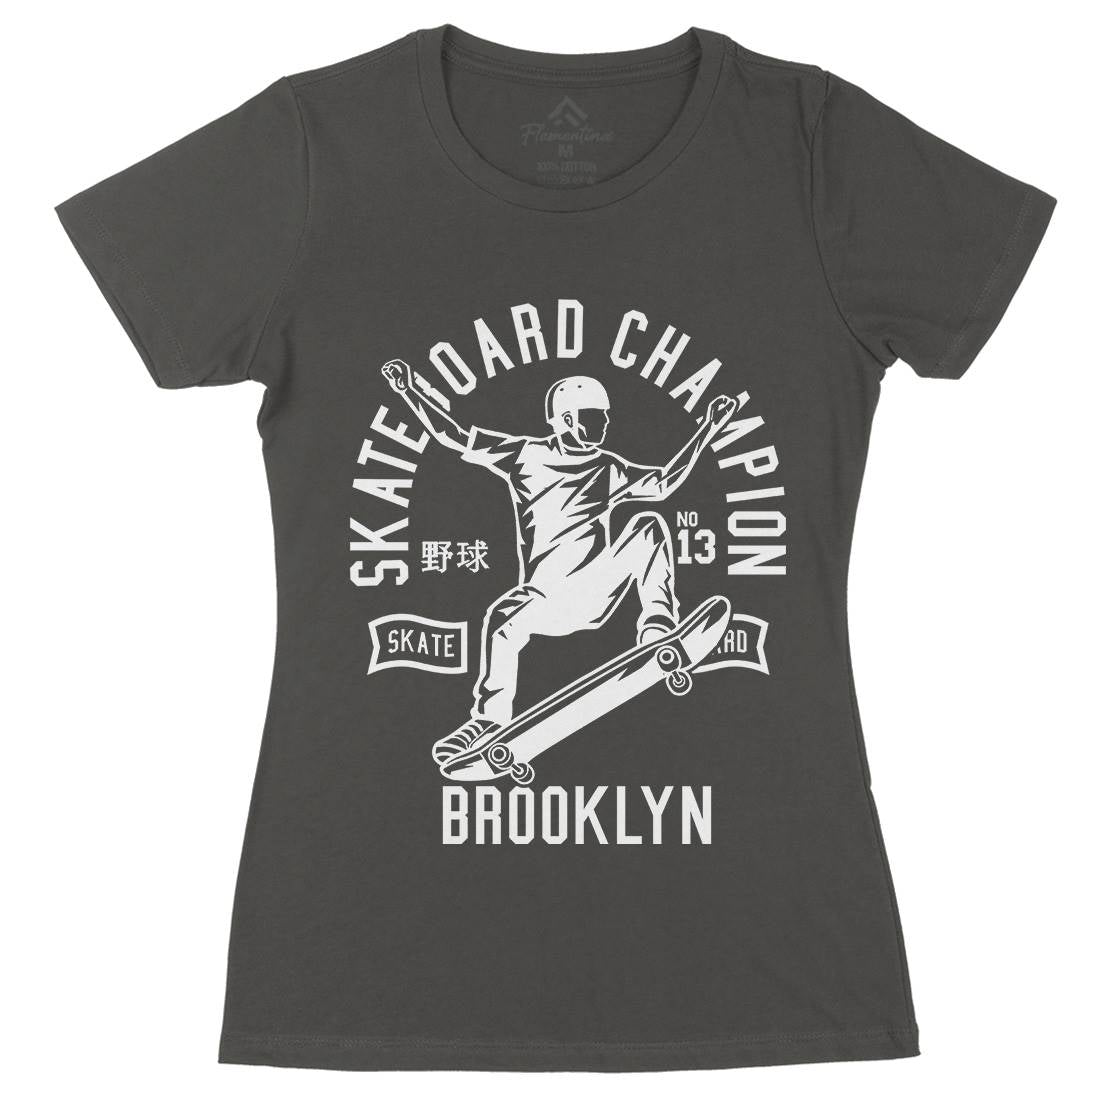 Skateboard Champion Womens Organic Crew Neck T-Shirt Skate B622